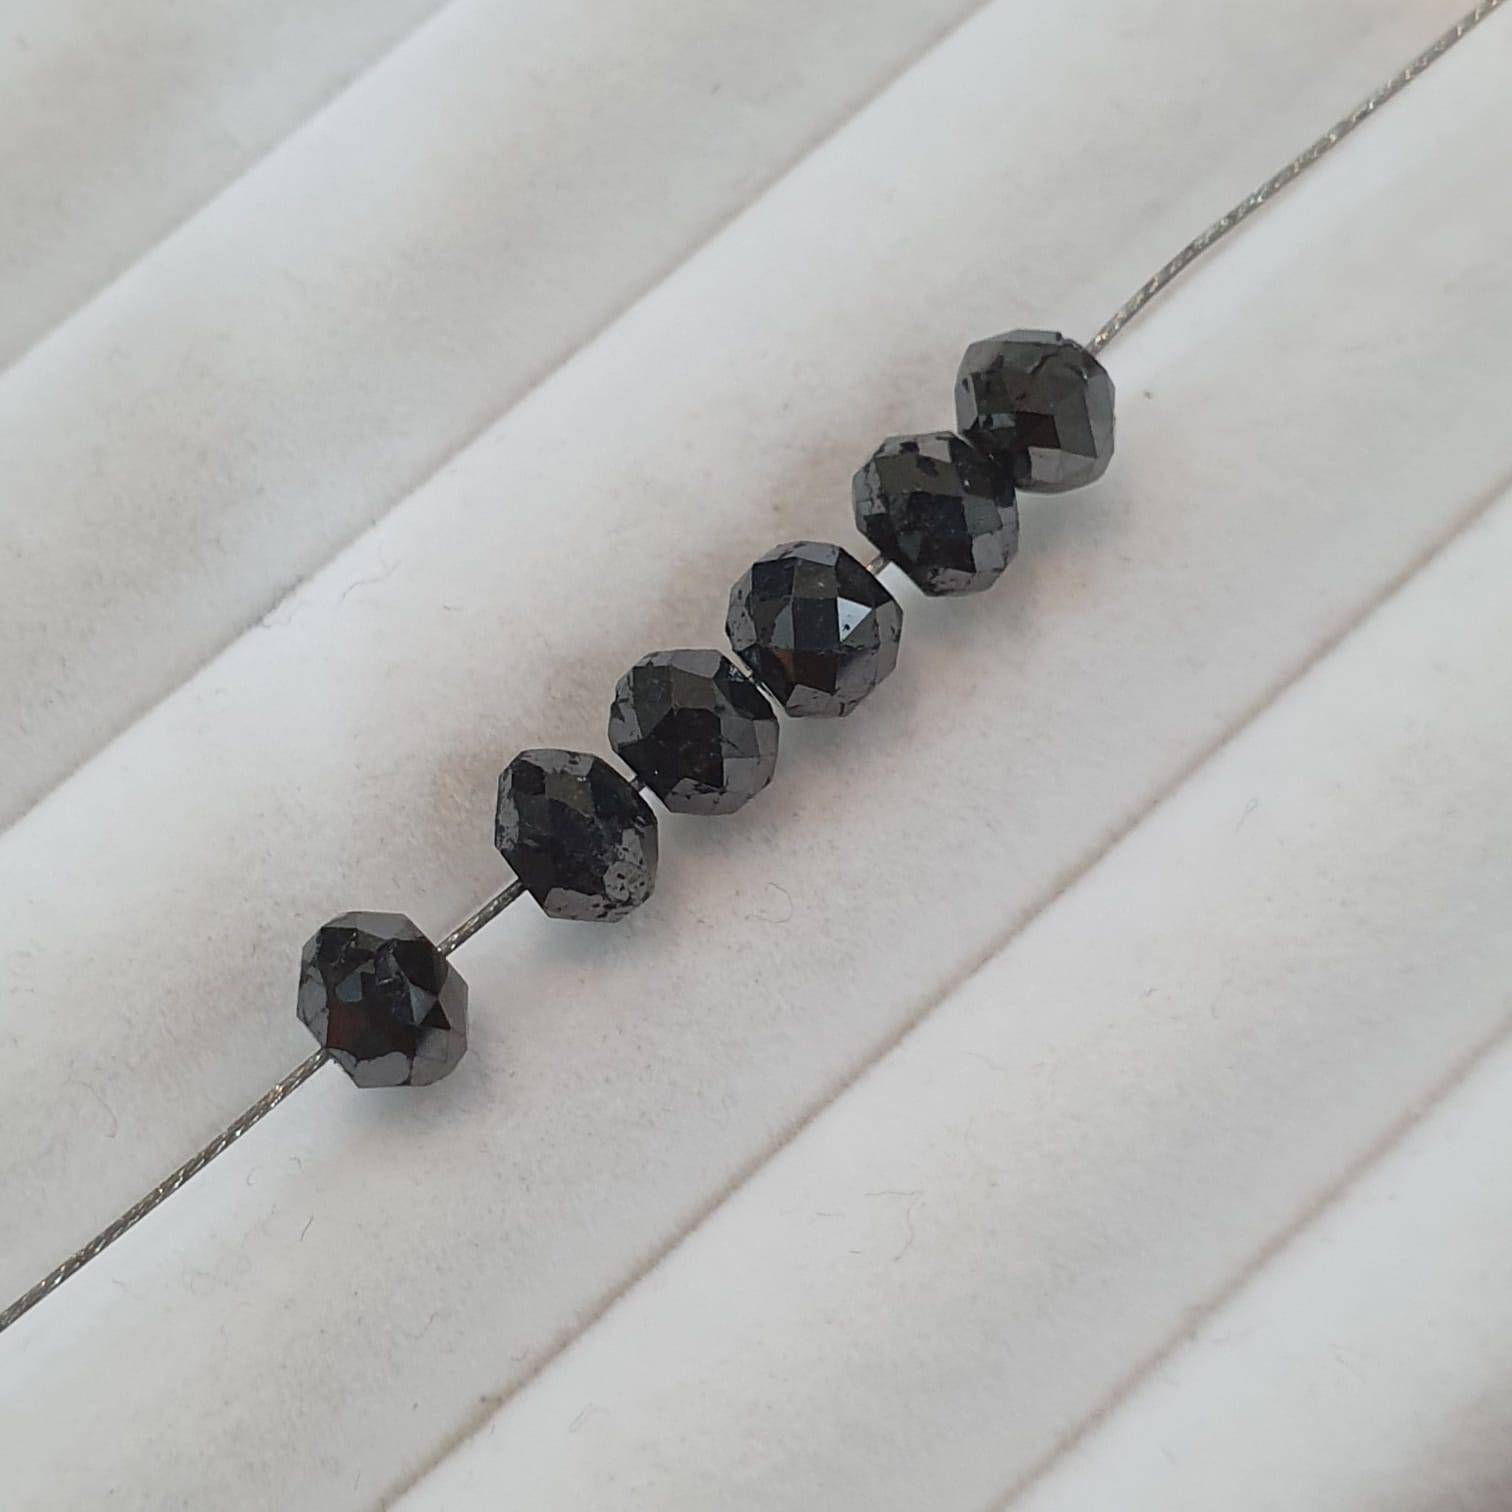 Natural Black Diamonds Large Beads Faceted SUPER SPARKLY - The LabradoriteKing